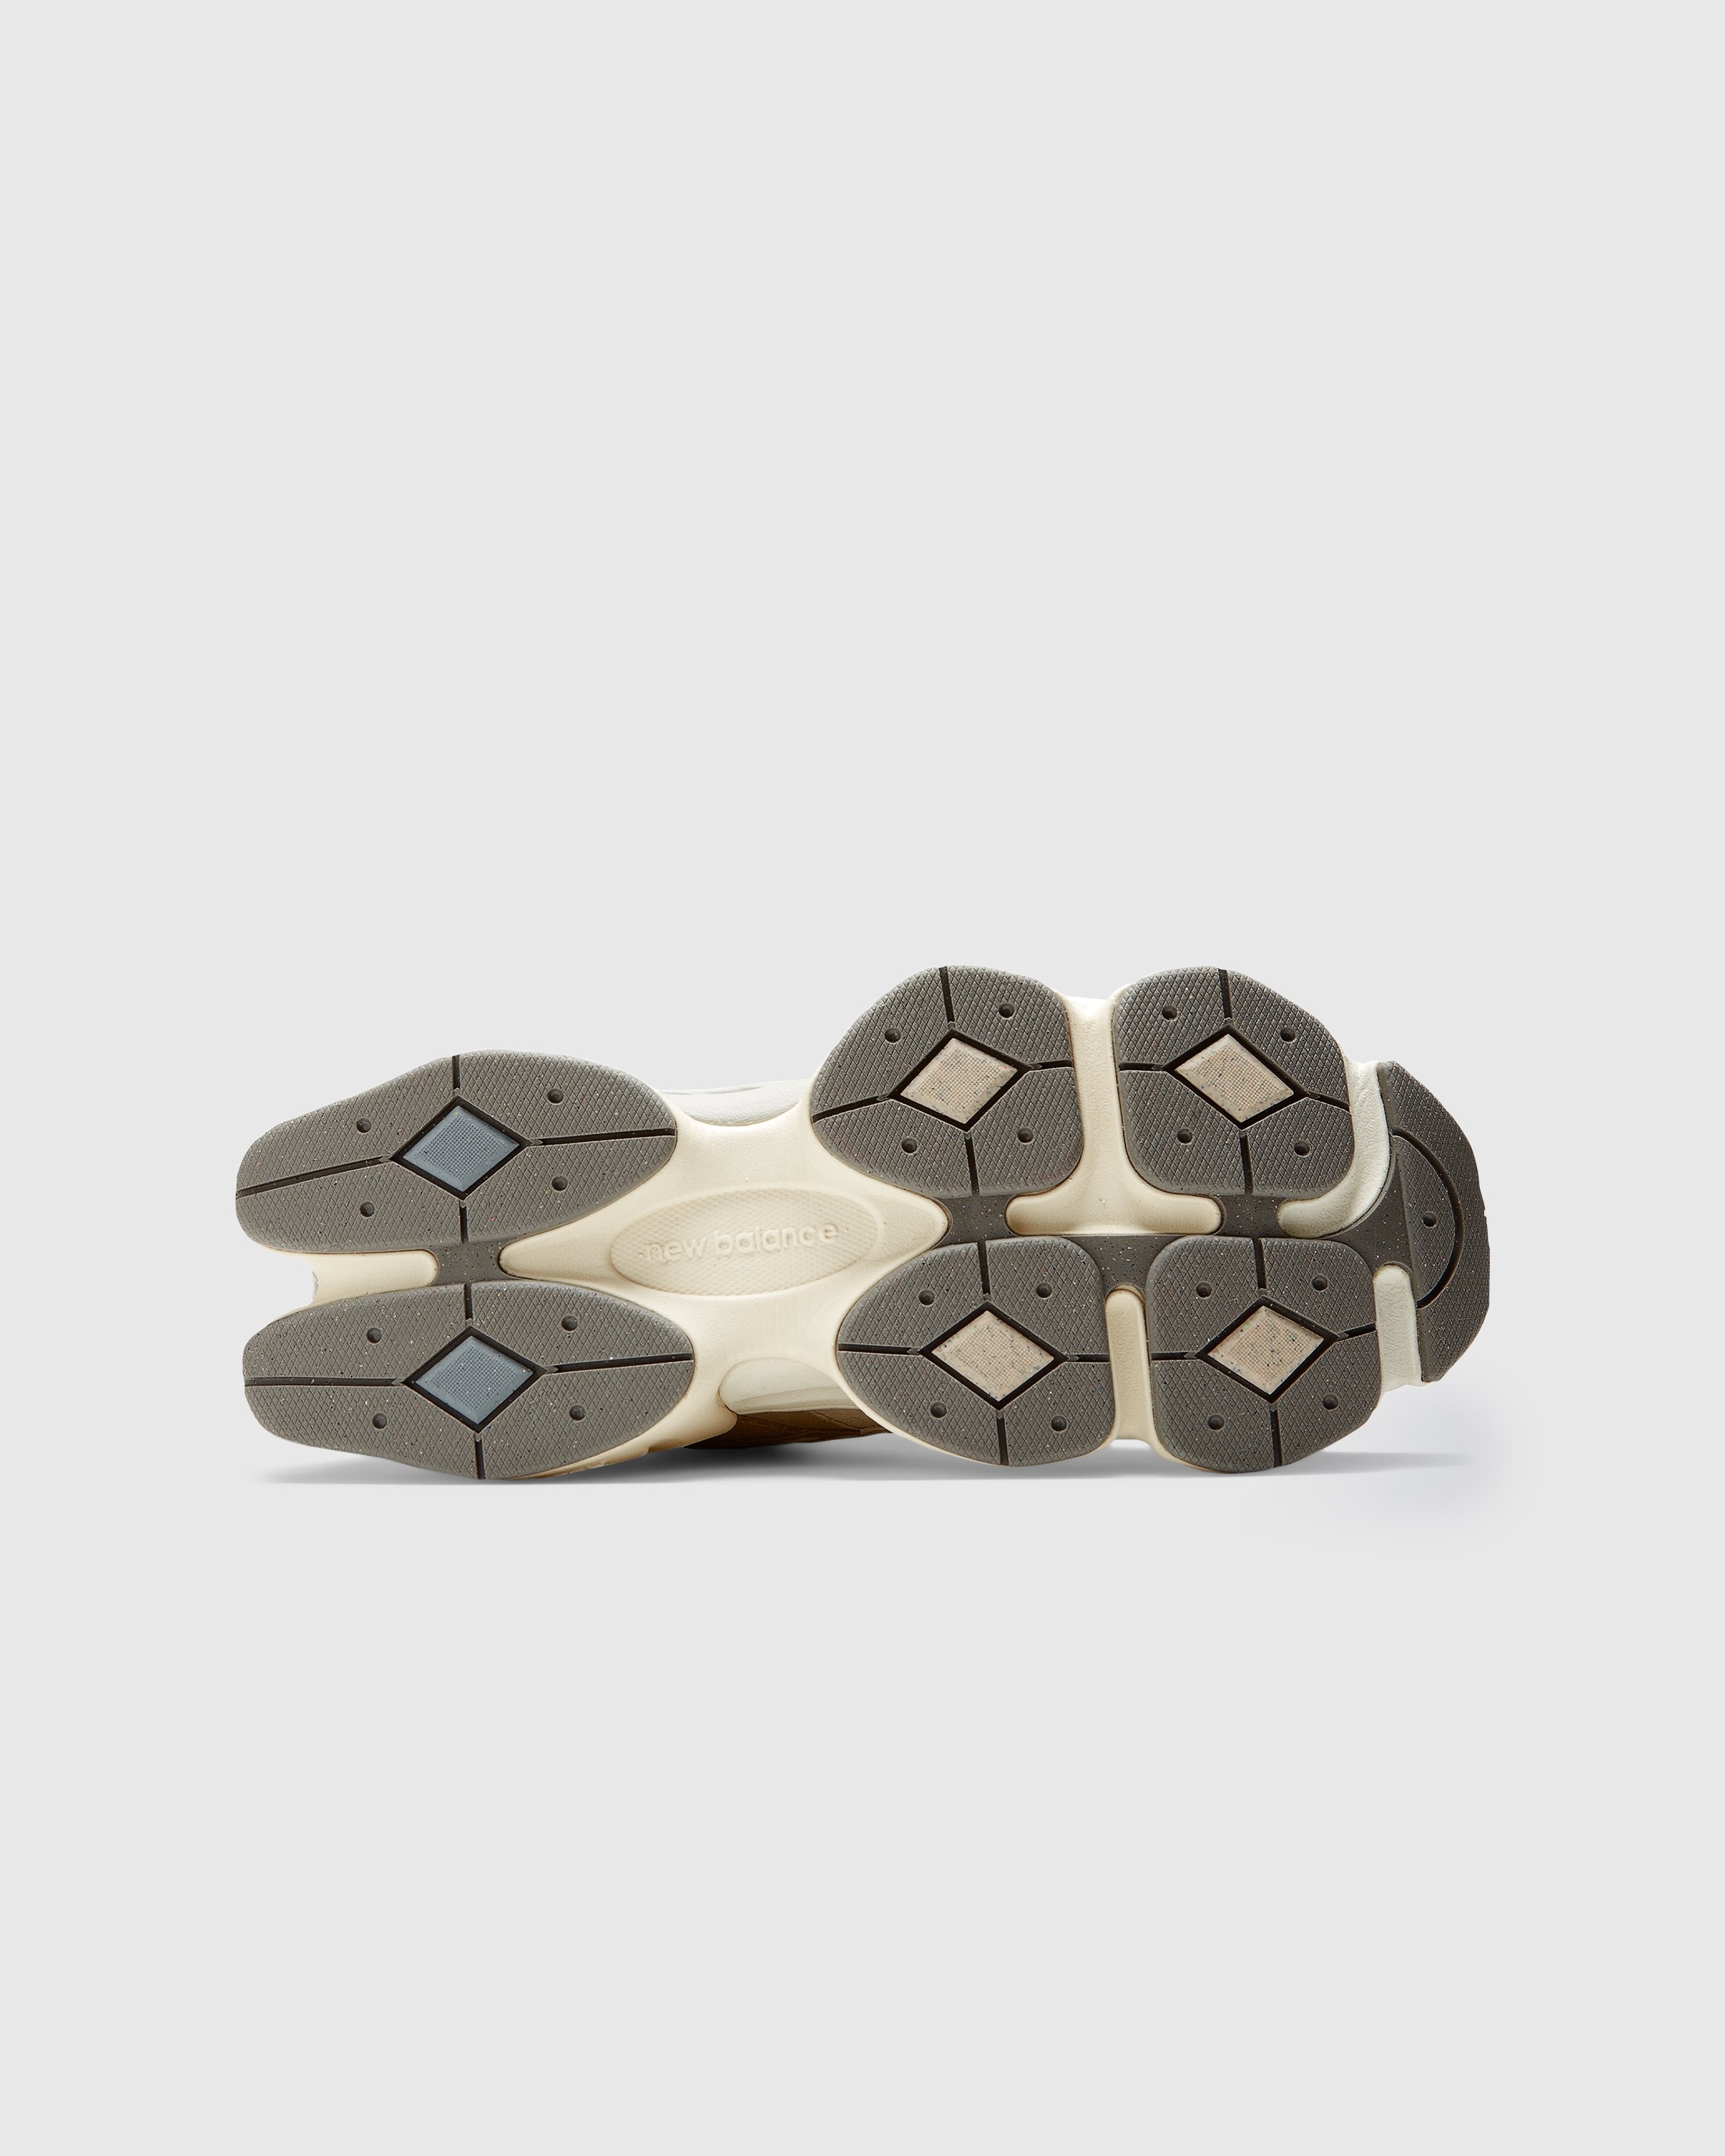 New Balance – U 9060 MUS Mushroom - Sneakers - Brown - Image 6